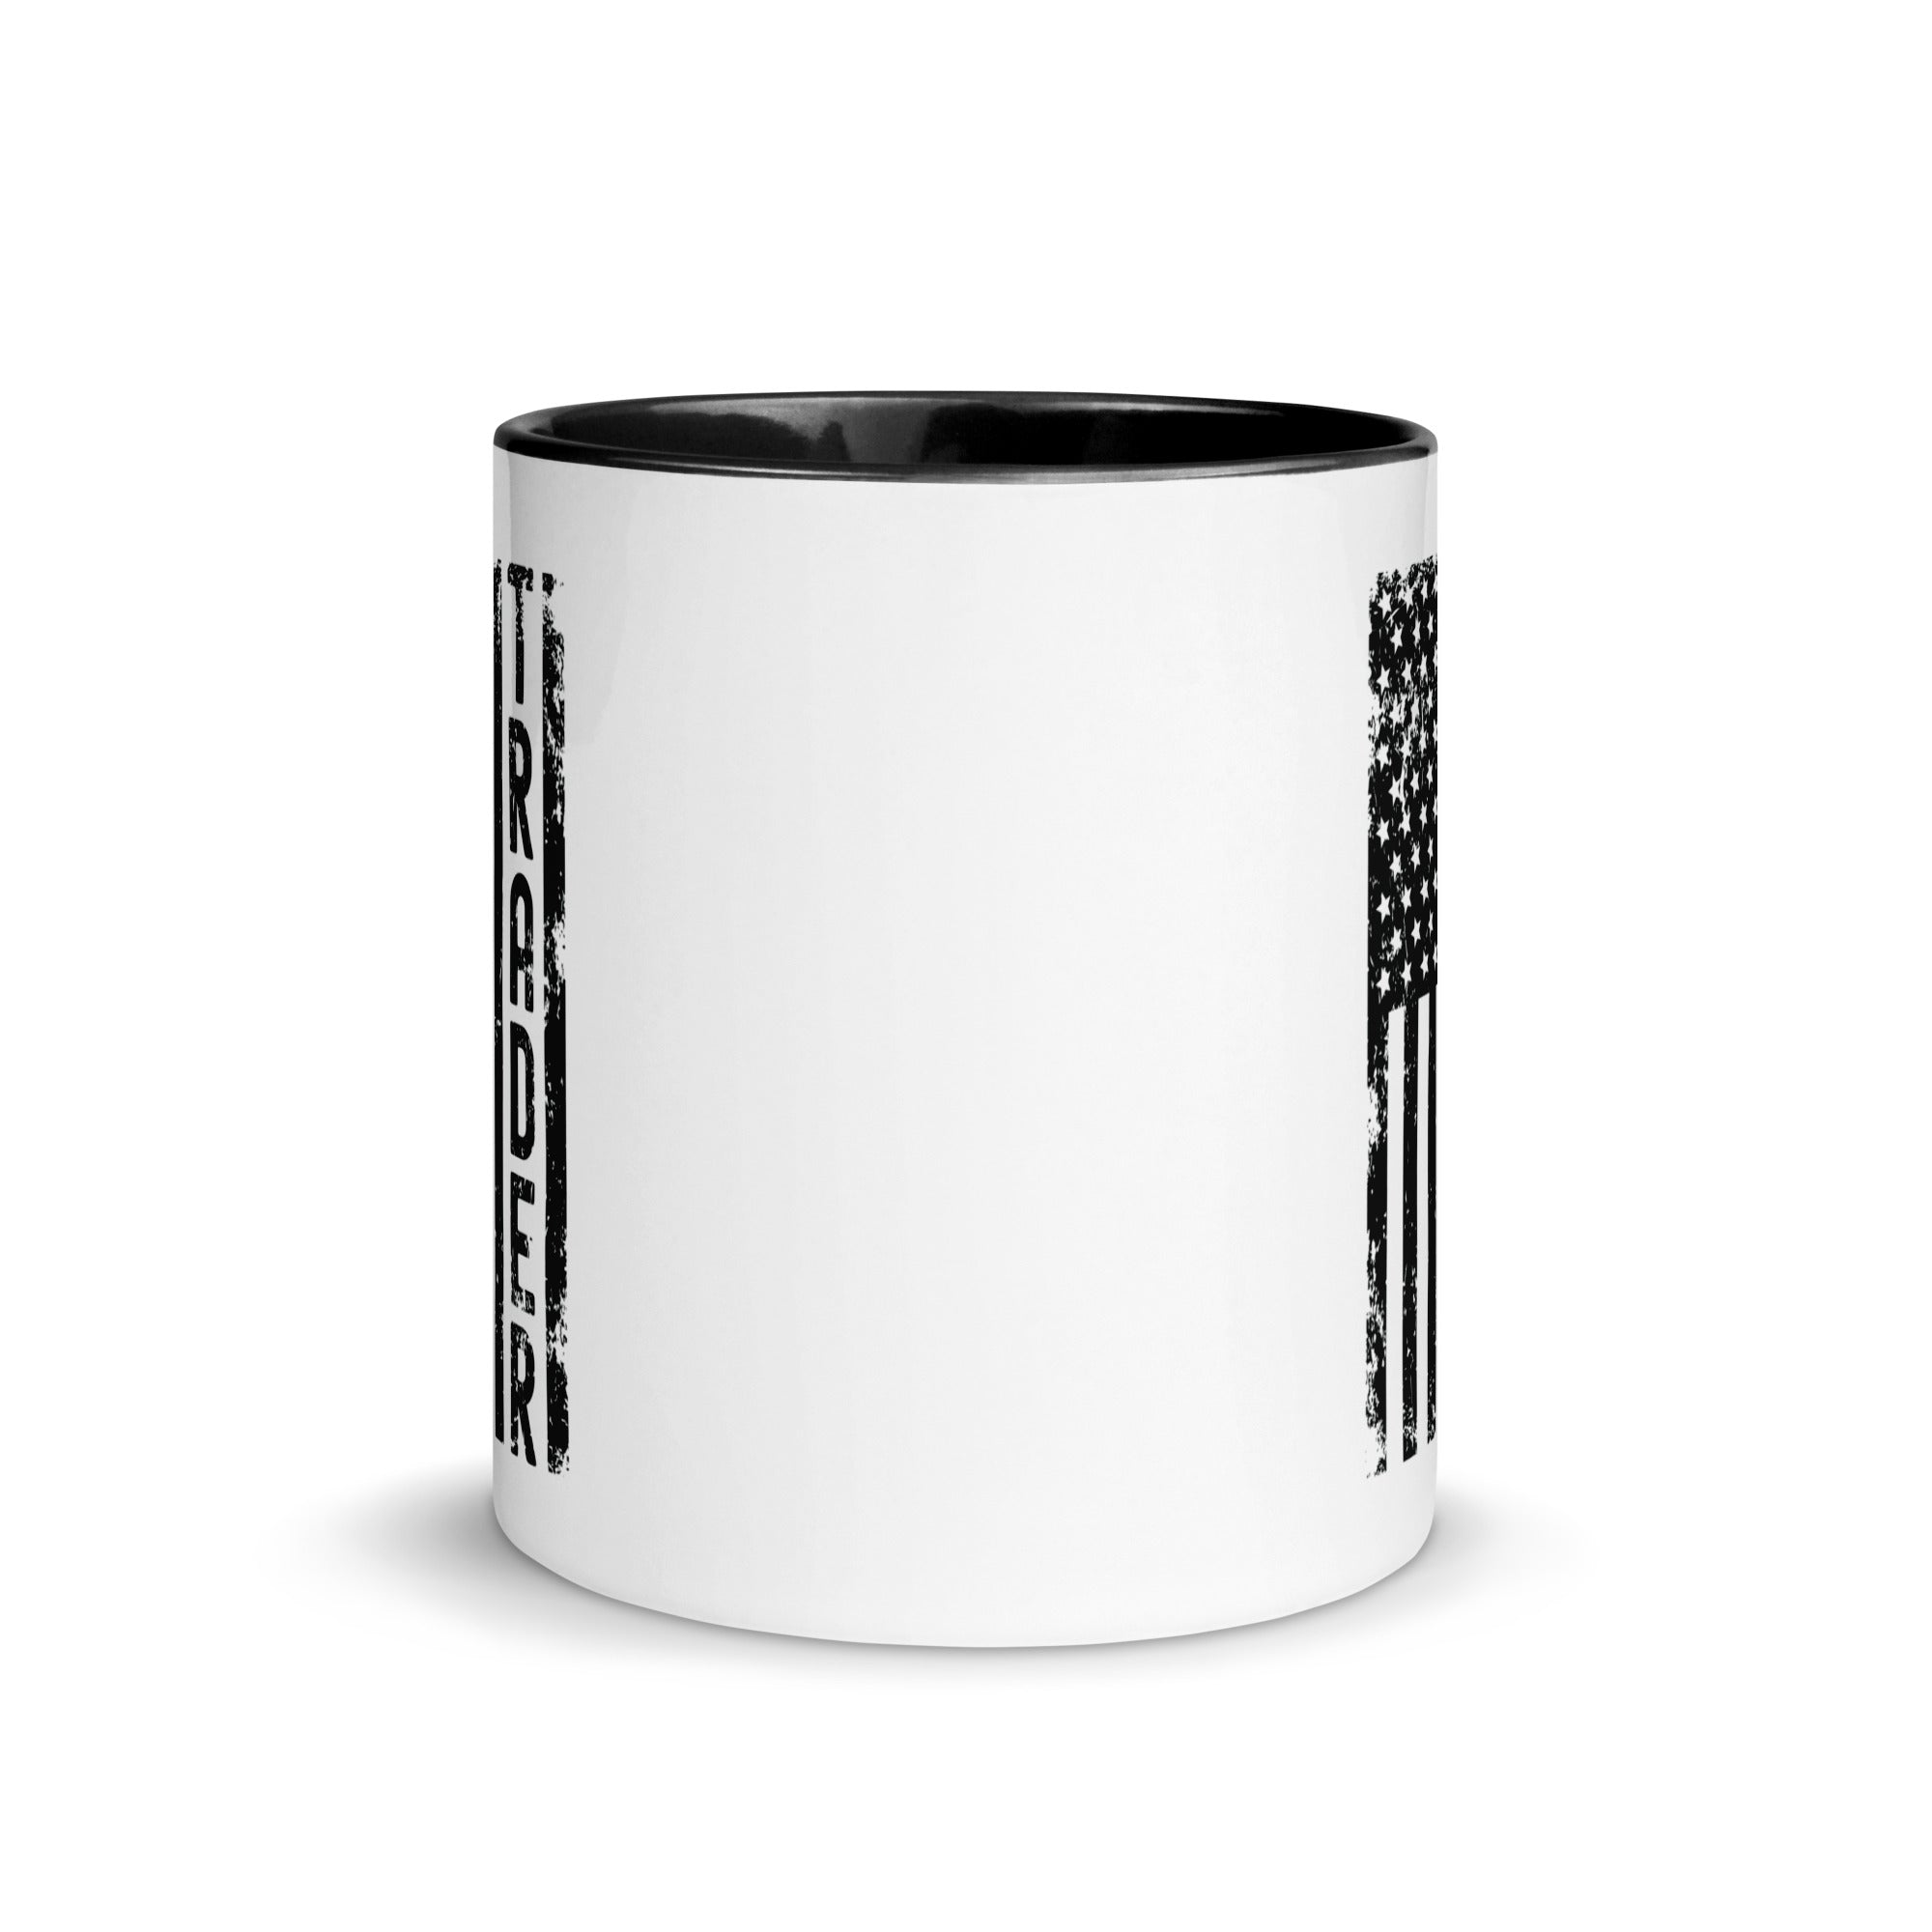 Mug with Color Inside | Trader (deisgn on American flag)